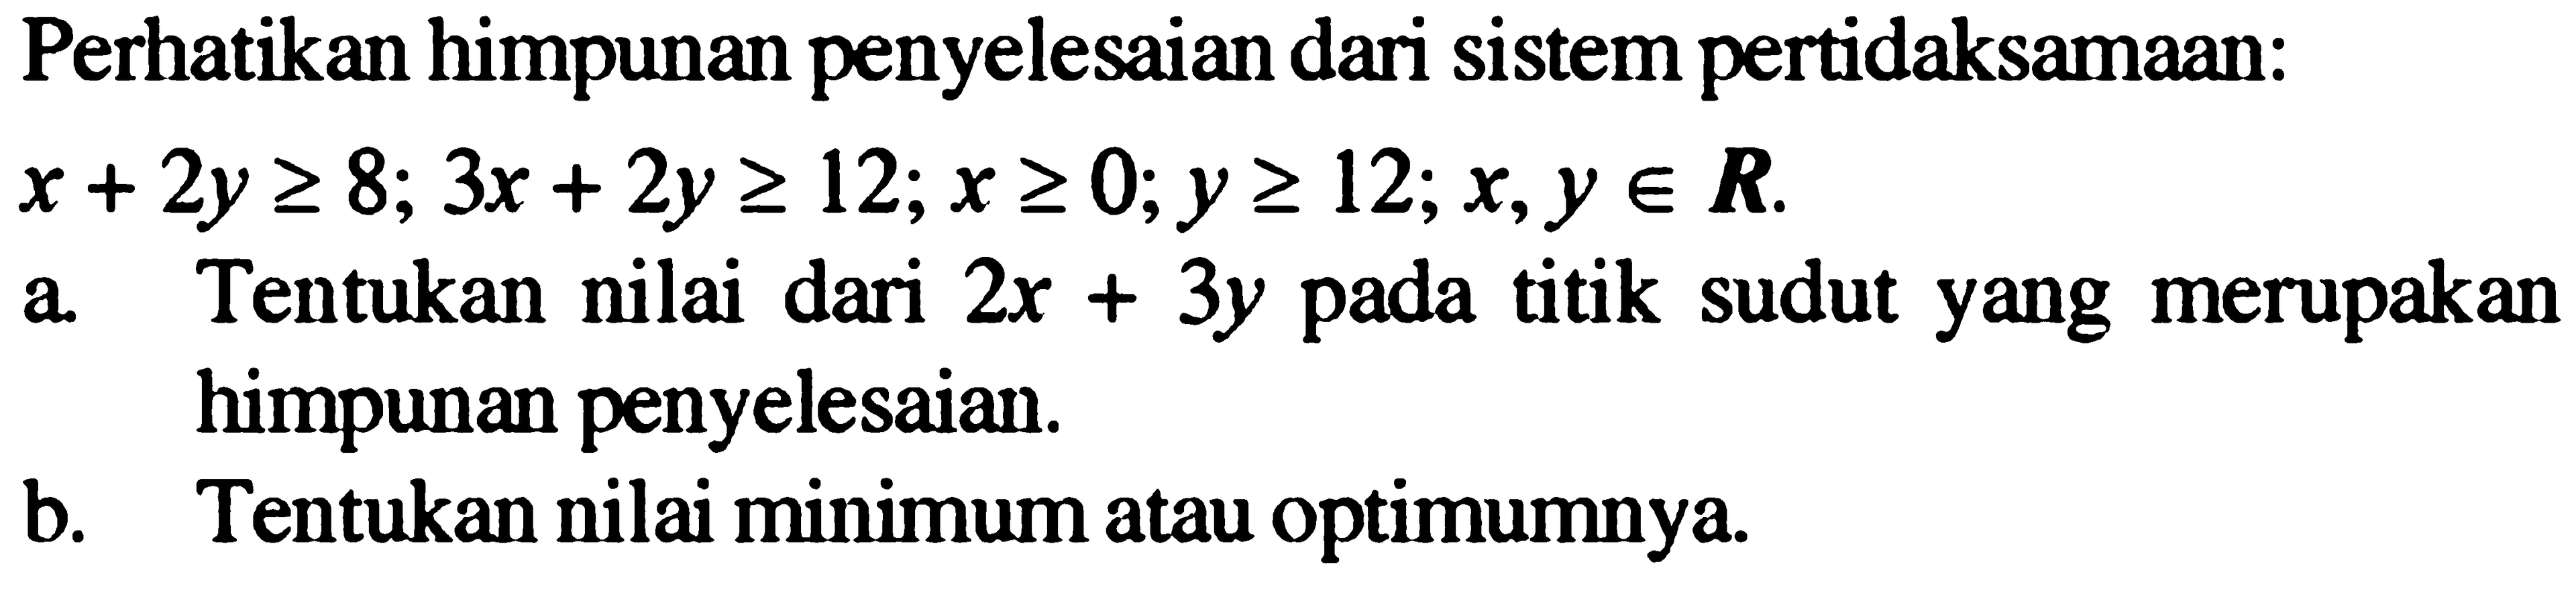 Perhatikan himpunan penyelesaian dari sistem pertidaksamaan: x+2y>=8; 3x+2y>=12; x>=0; y>=12, x,y e R. a. Tentukan nilai dari 2x+3y pada titik sudut yang merupakan himpunan penyelesaian. b. Tentukan nilai minimum atau optimumnya.